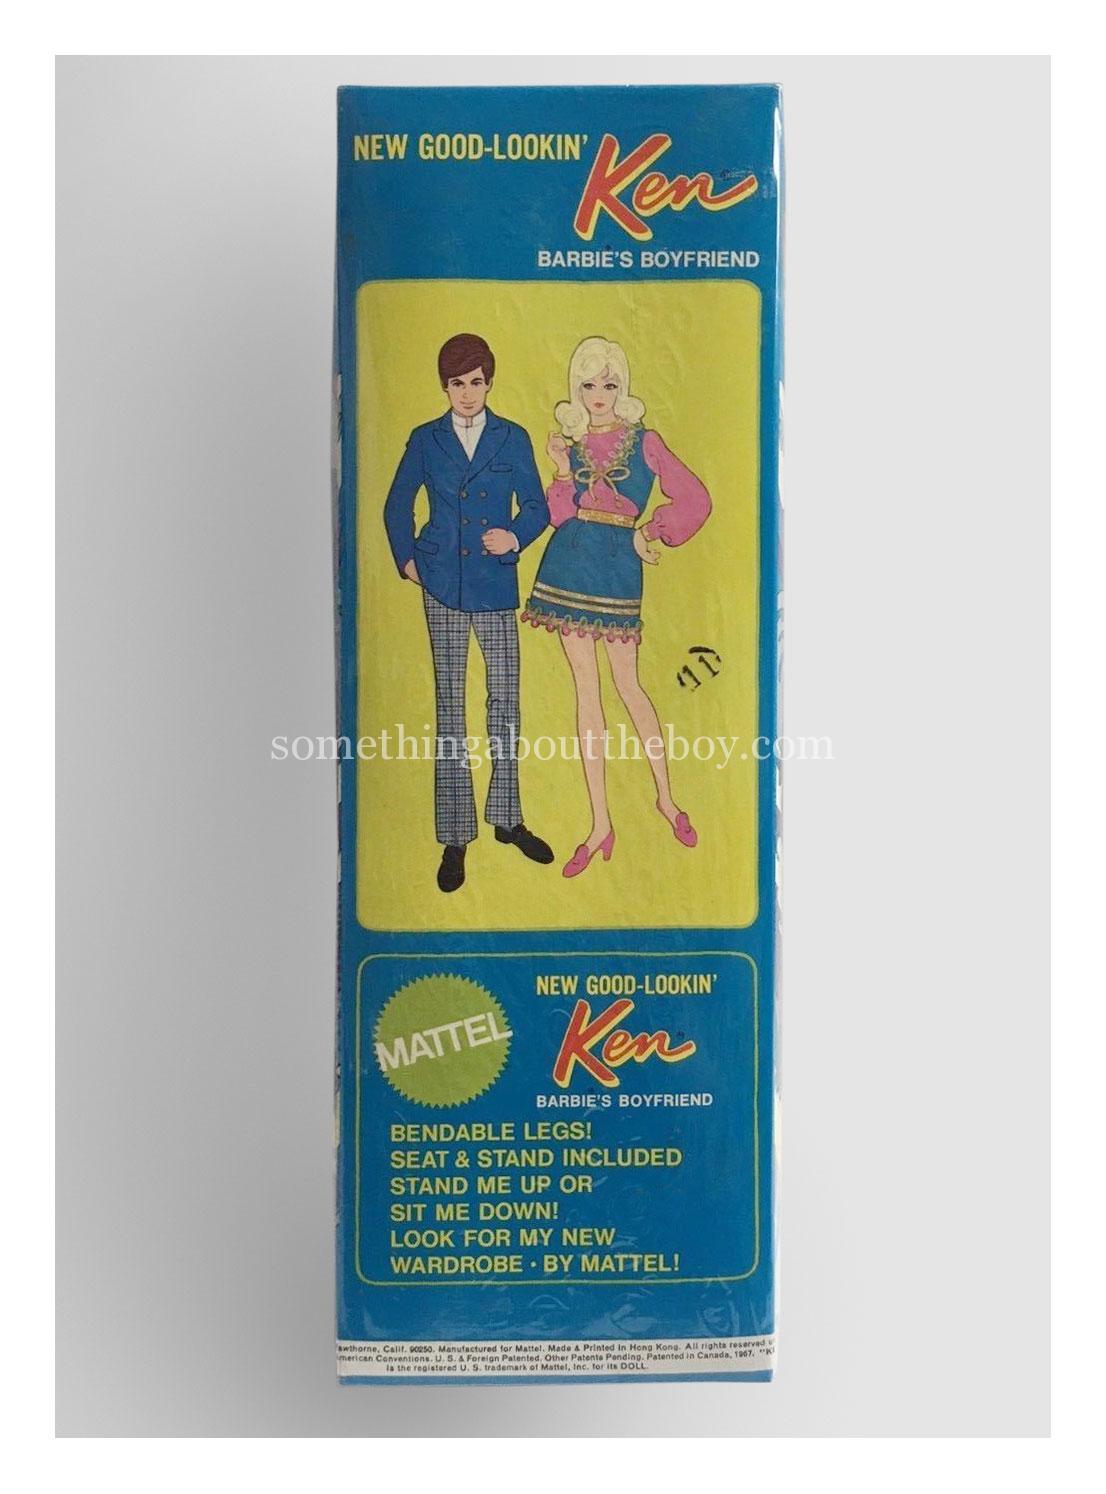 1971 #1124 New Good-Lookin' Ken original packaging